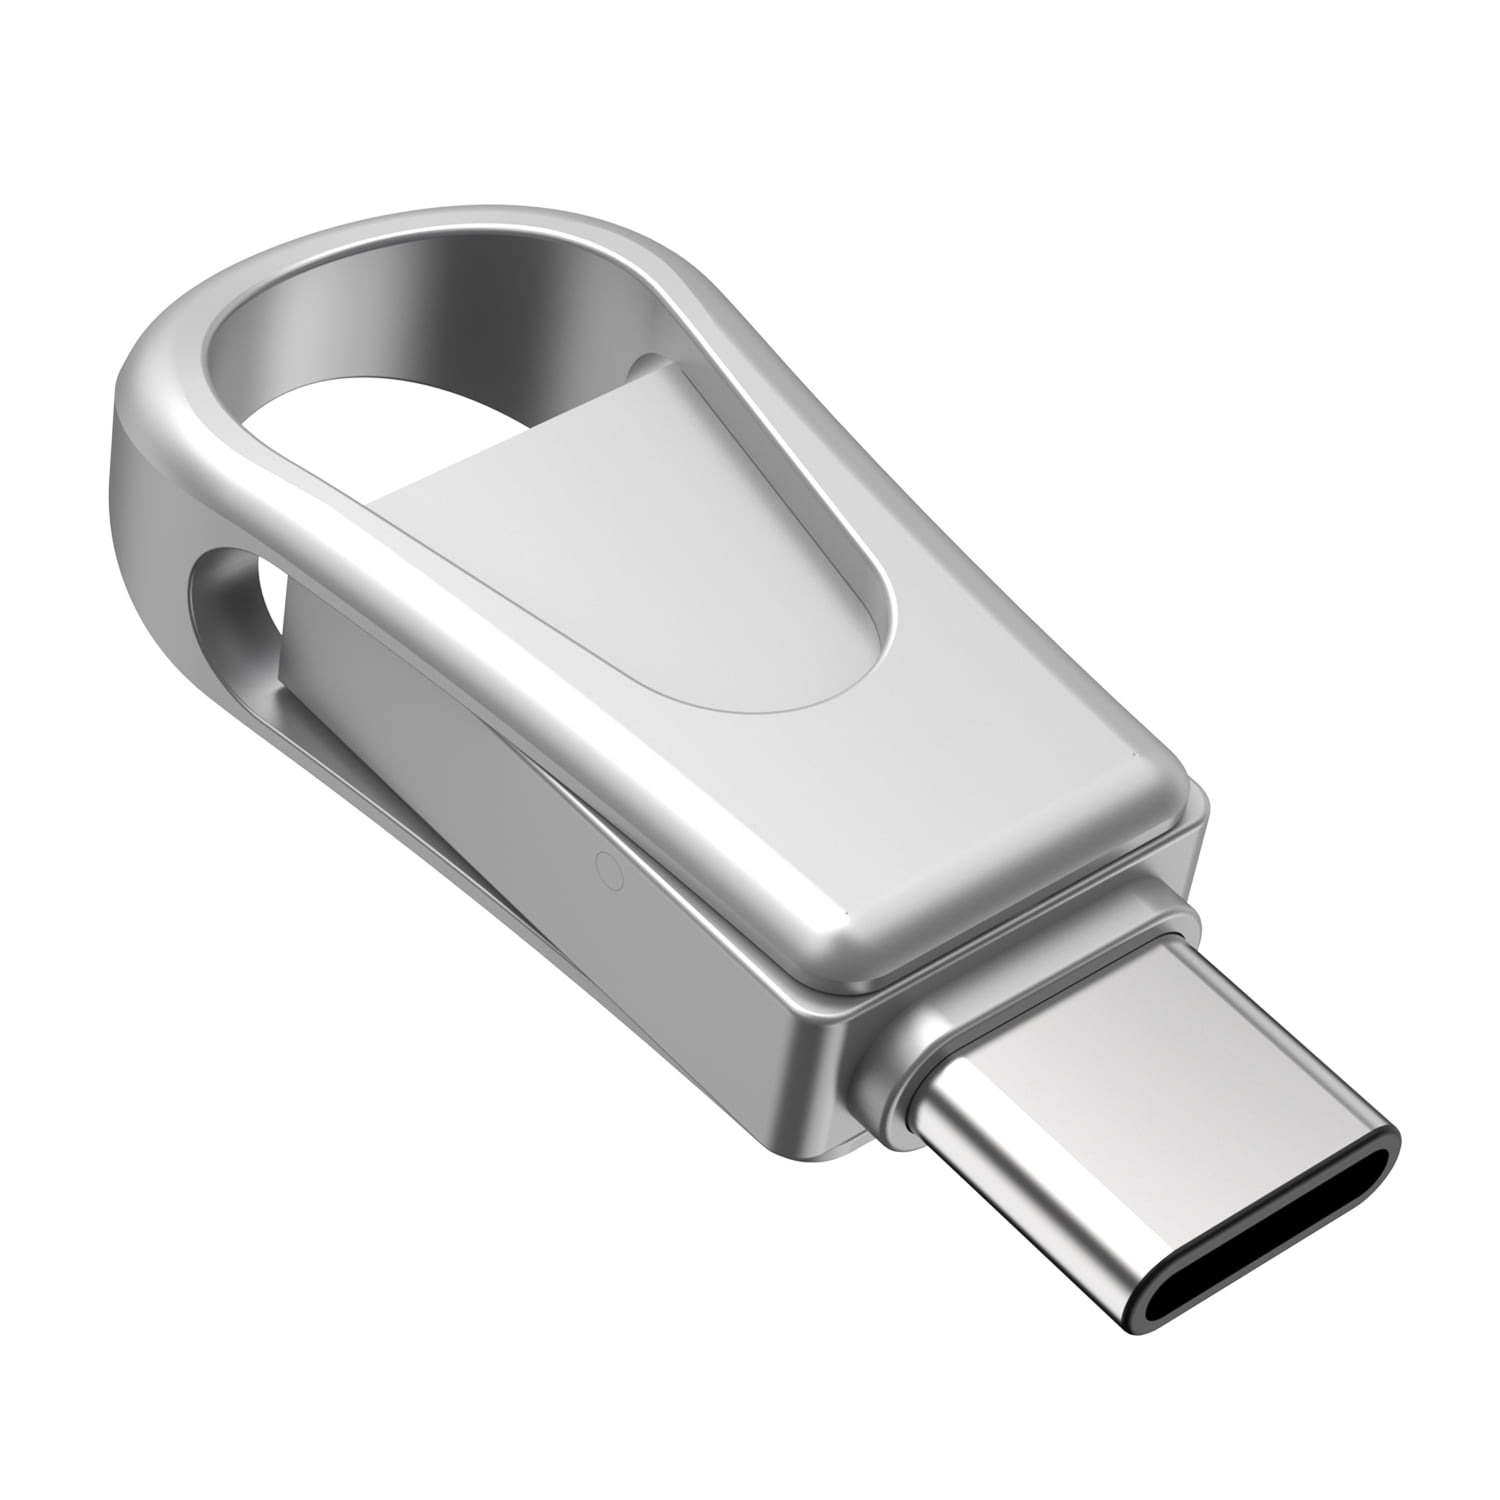 Flash Drive 512gb 3.0 USB Drive Photo Stick Thumb Drive USB Flash Drive Pendrive Jump Drive Swivel Key Chain Design,Black 